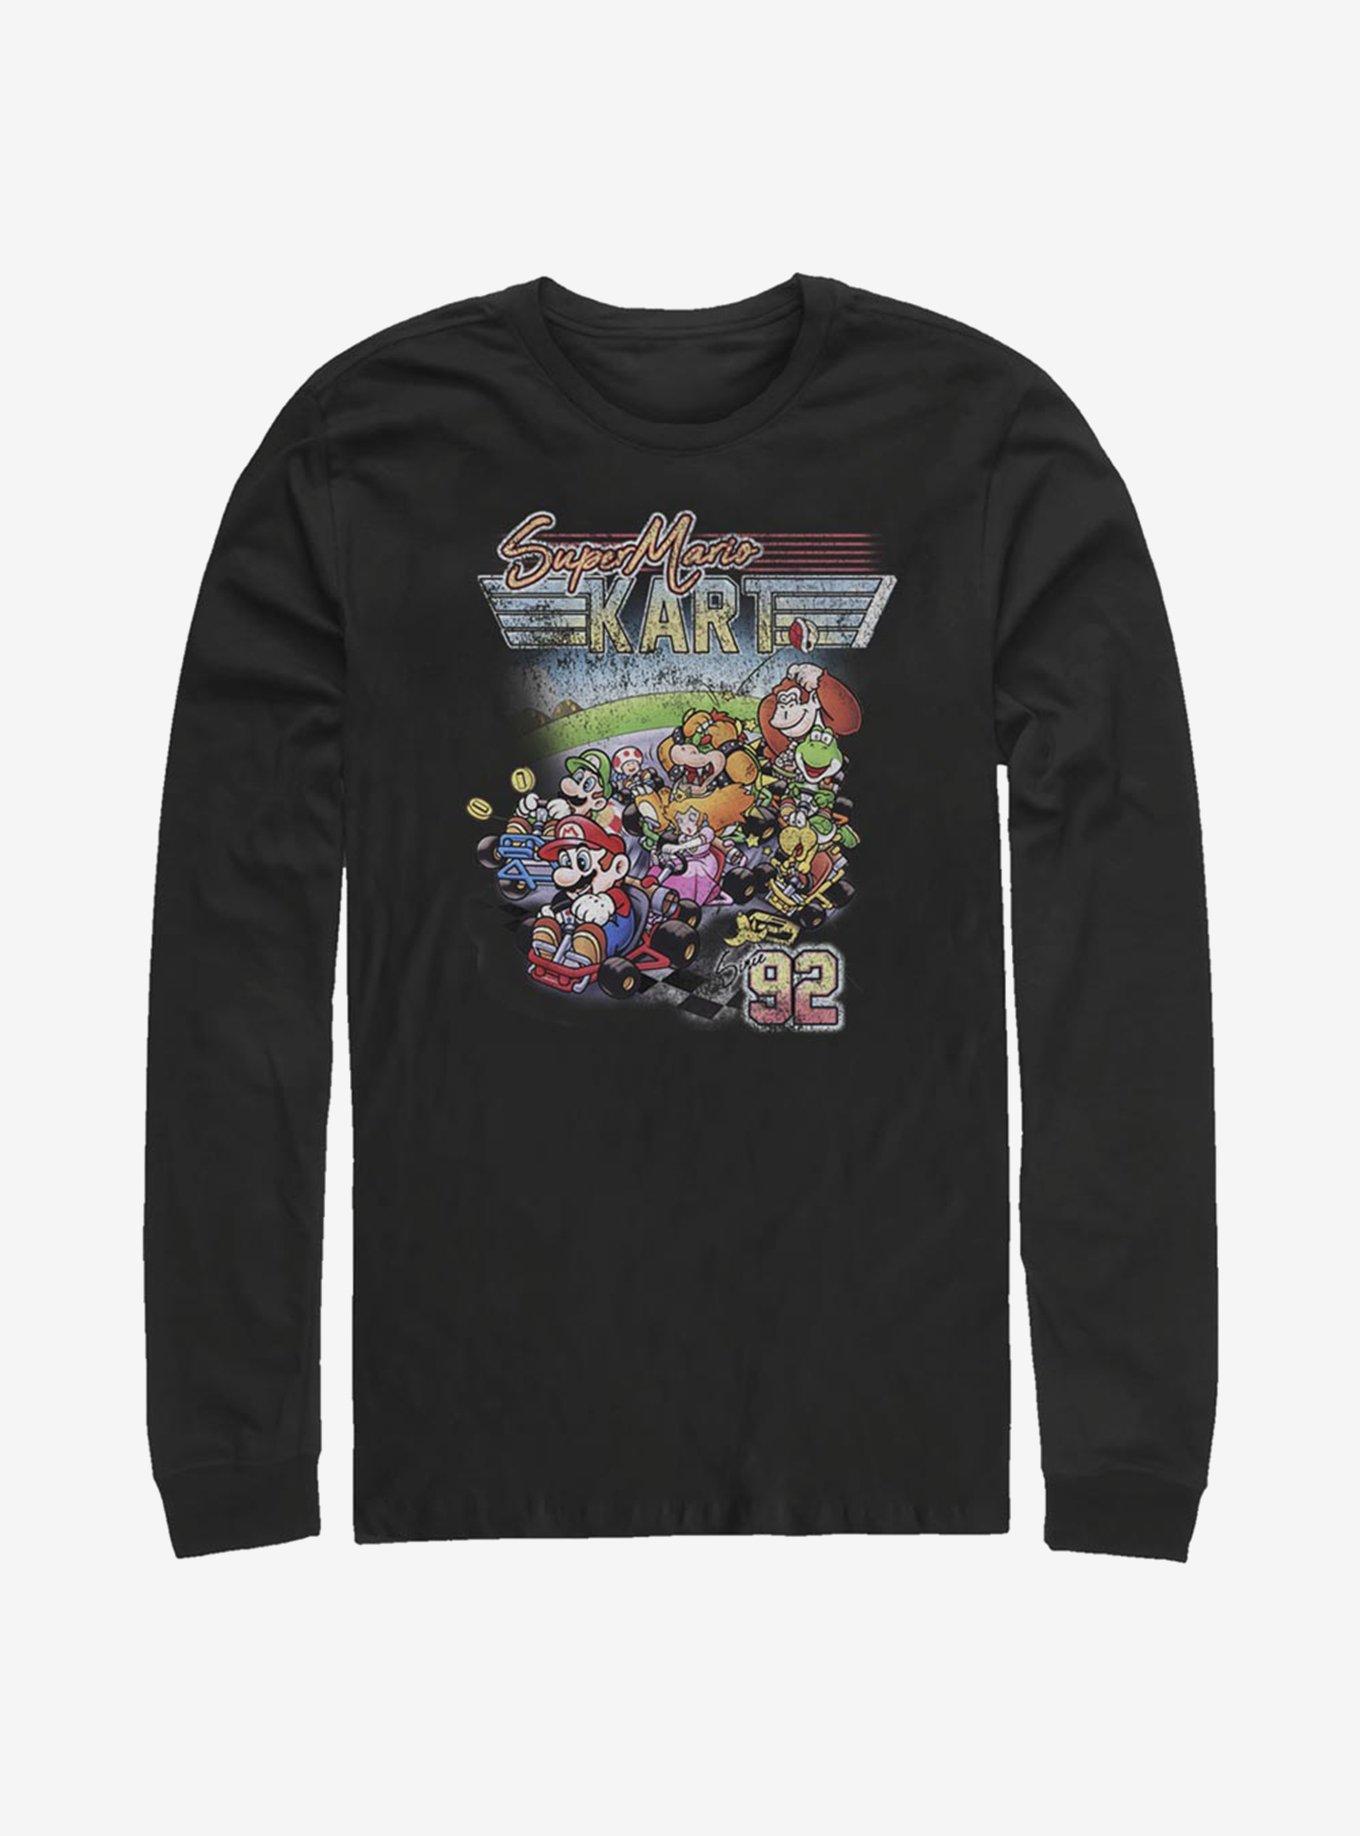 Super Mario Kart Nineties Long-Sleeve T-Shirt